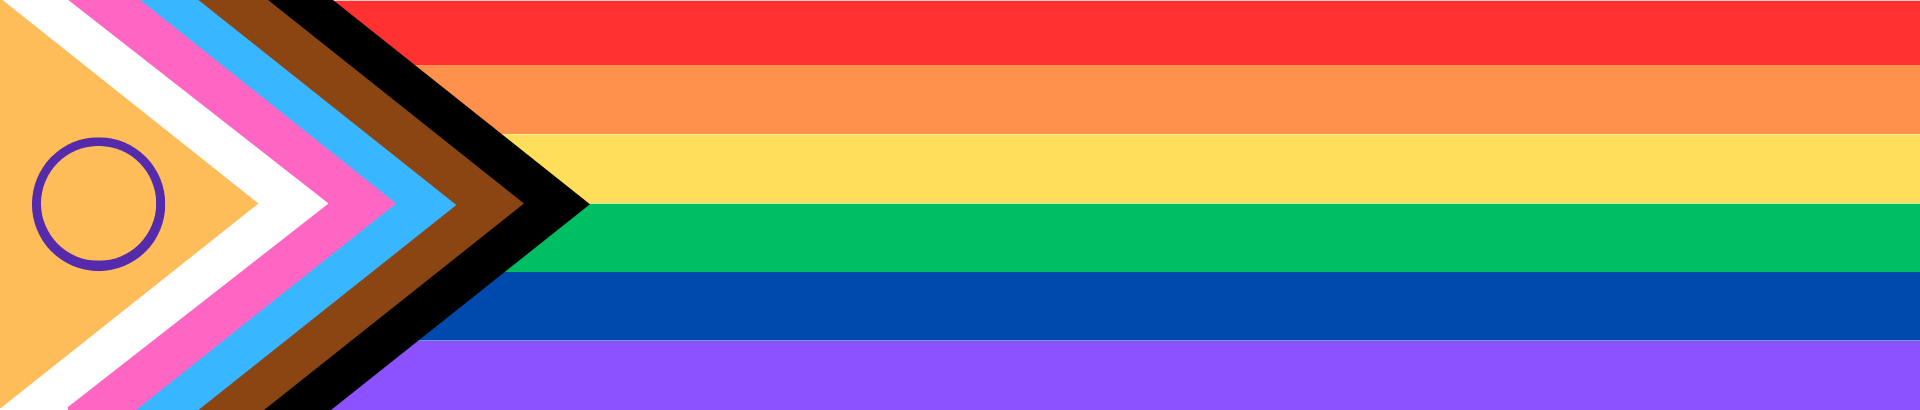 Intersex Pride Progress Flag